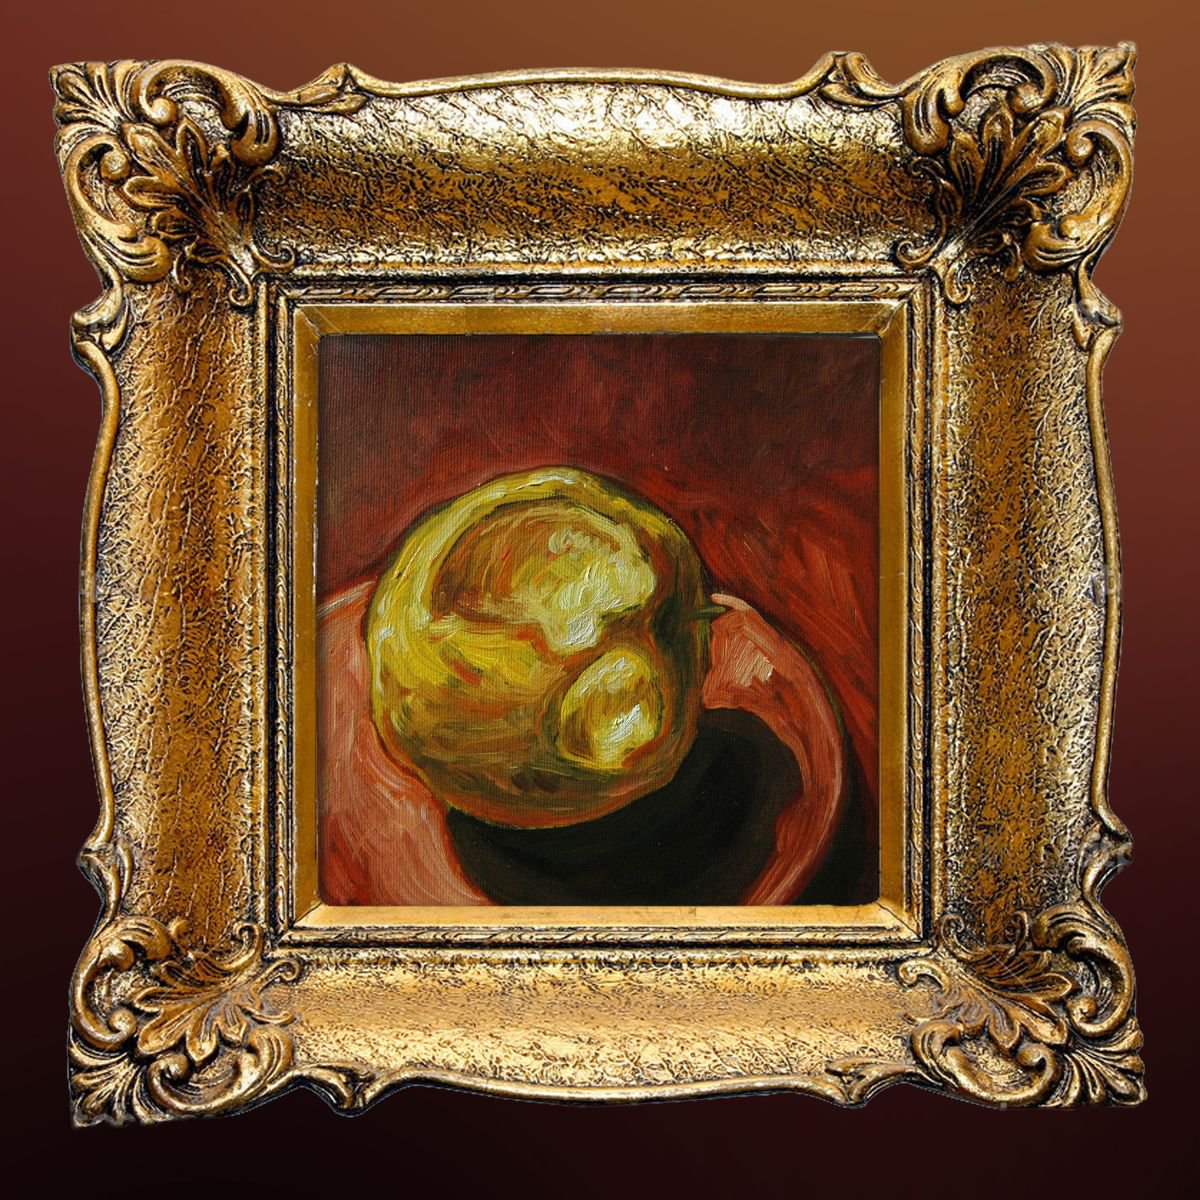 rotten apple by Cosmin Tudor Sirbulescu